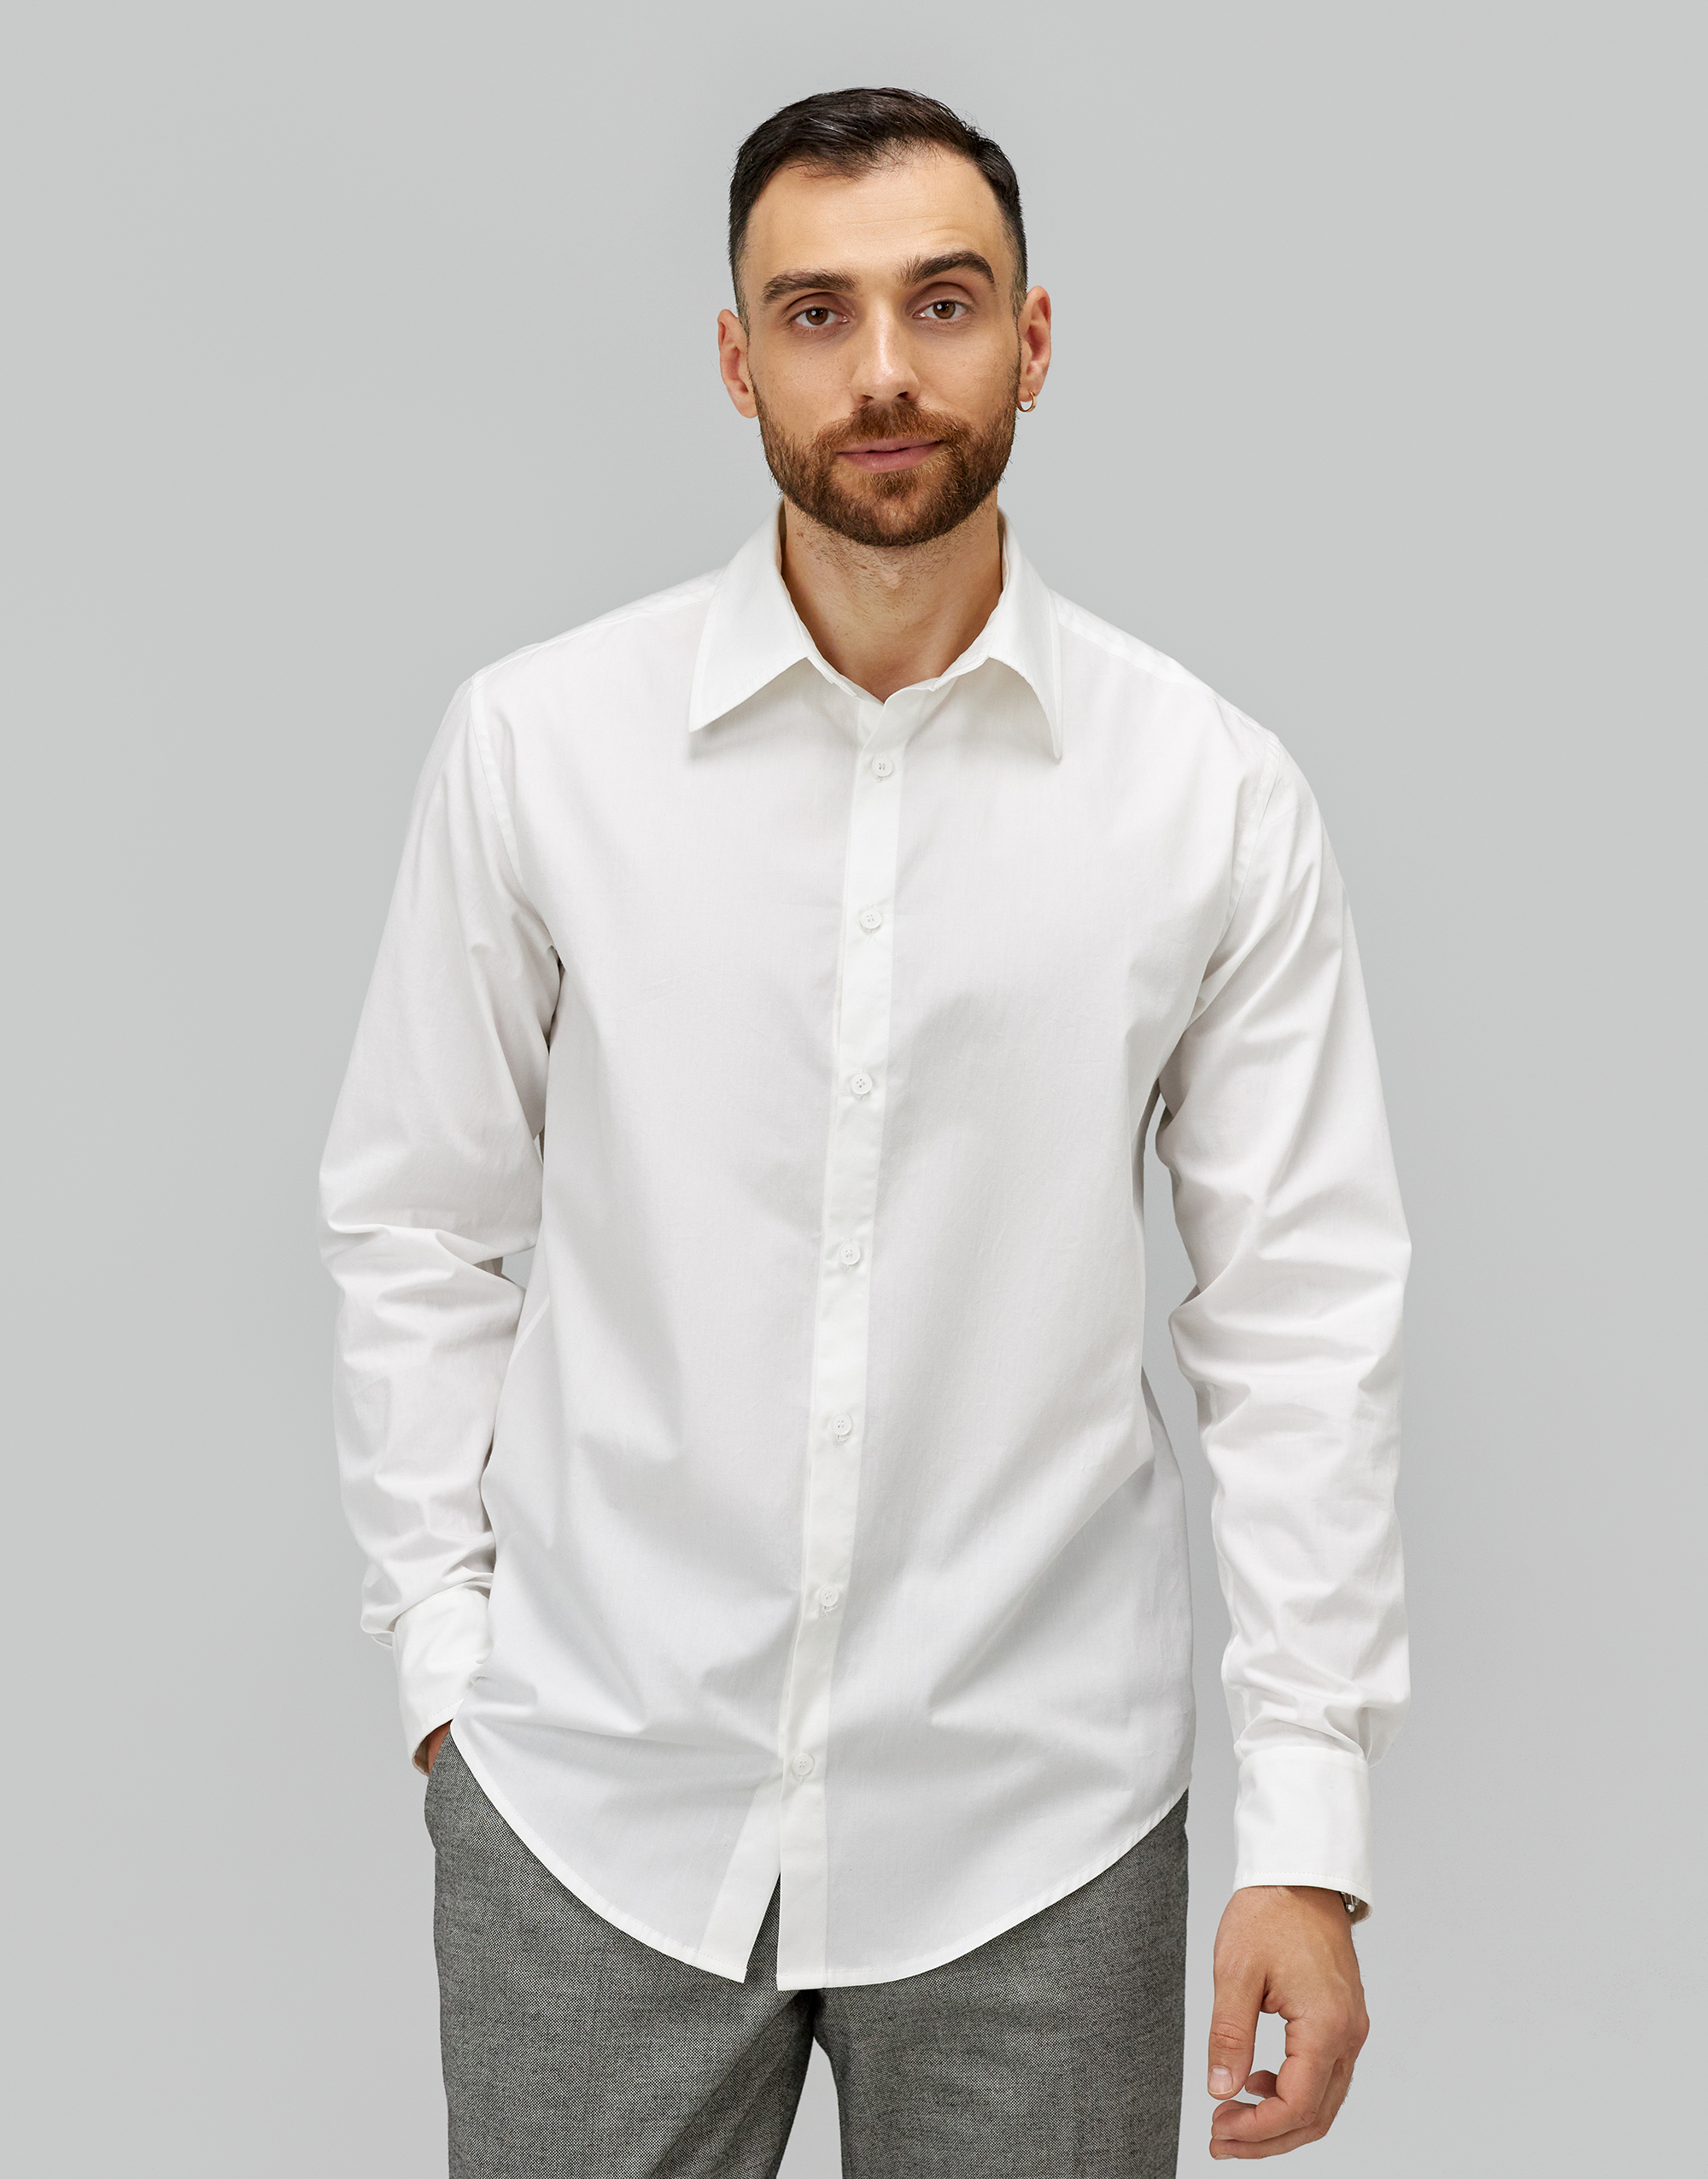 Shirt, pattern №60 buy on-line